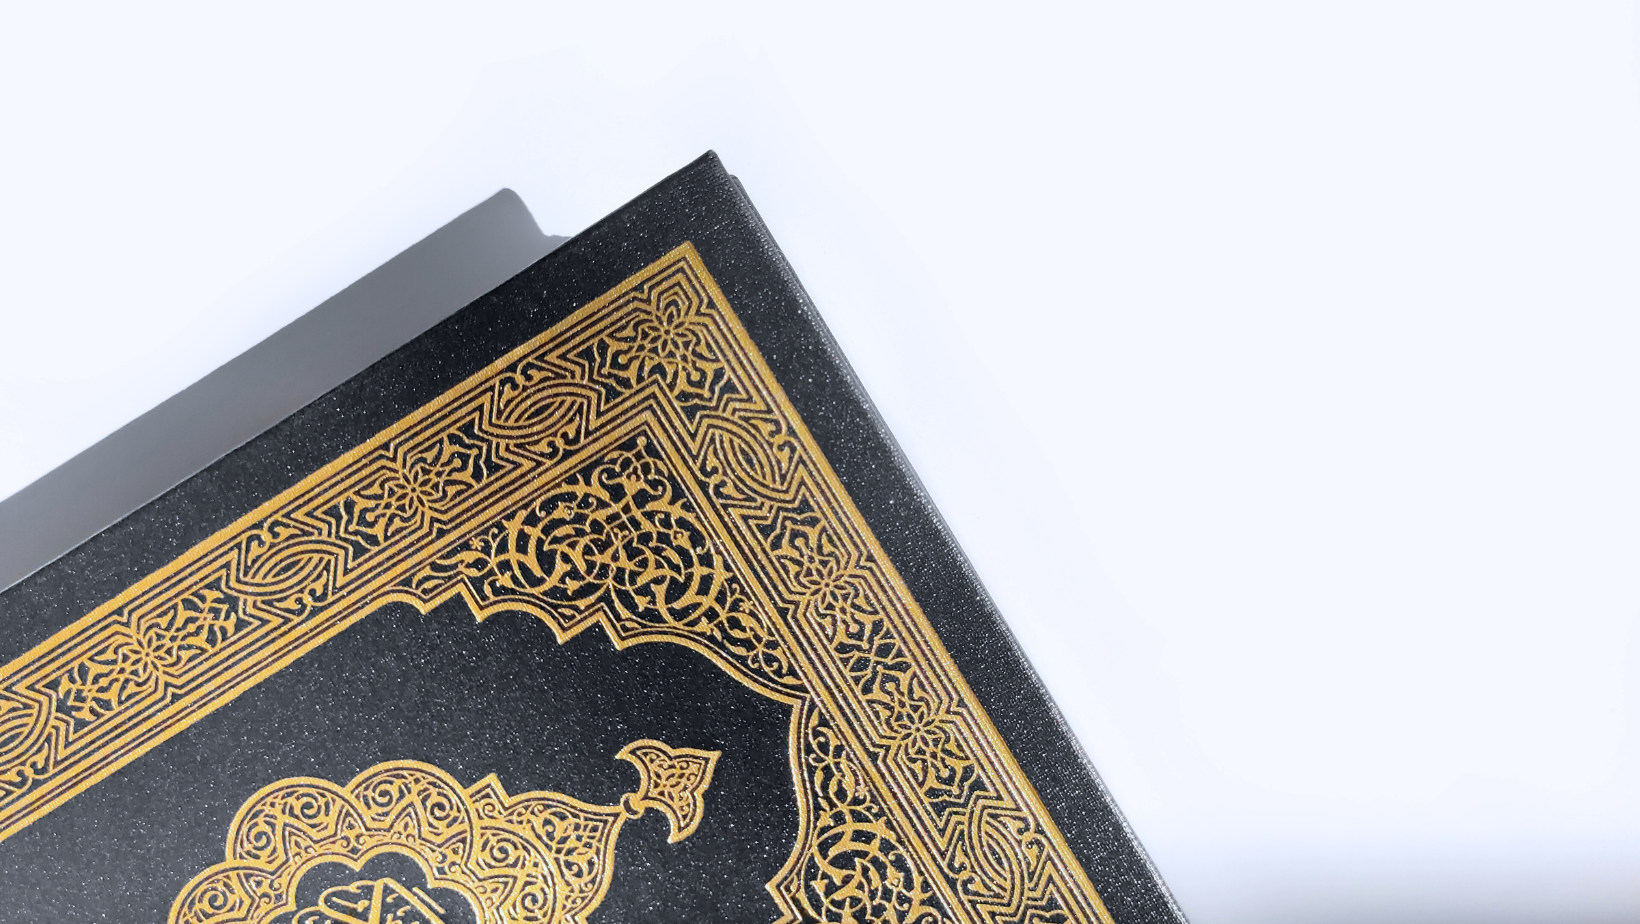 Blog title image - ornate Quran